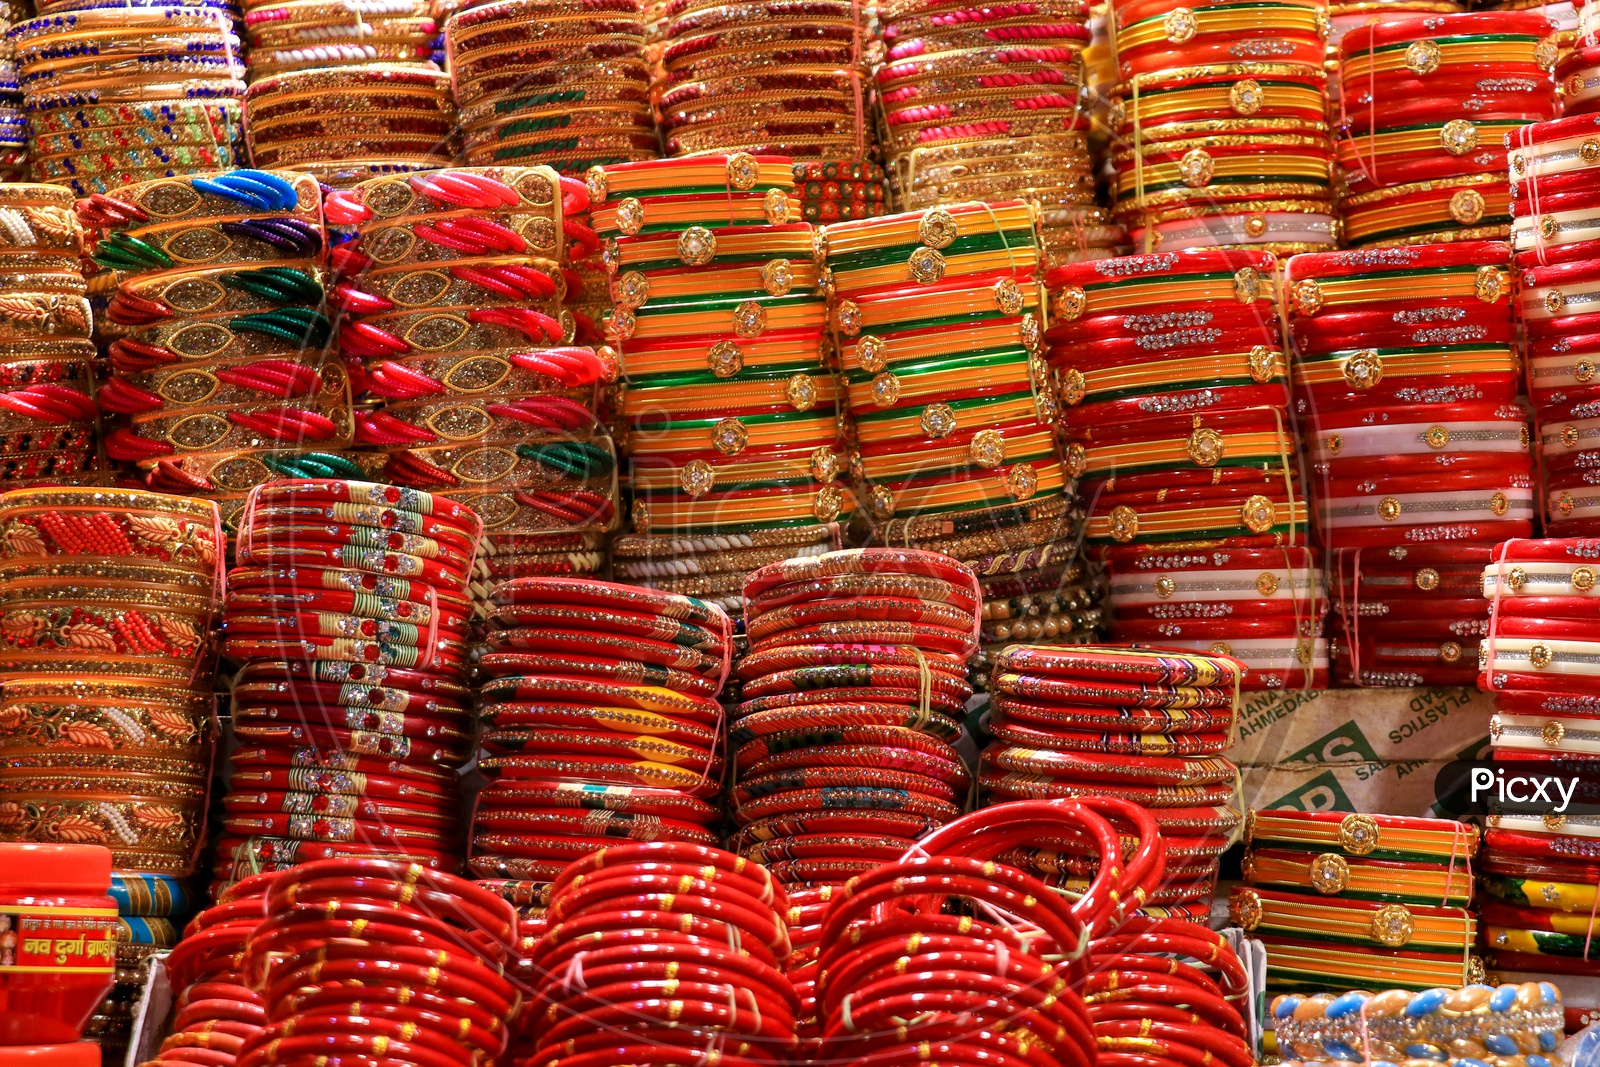 Colorful bangles